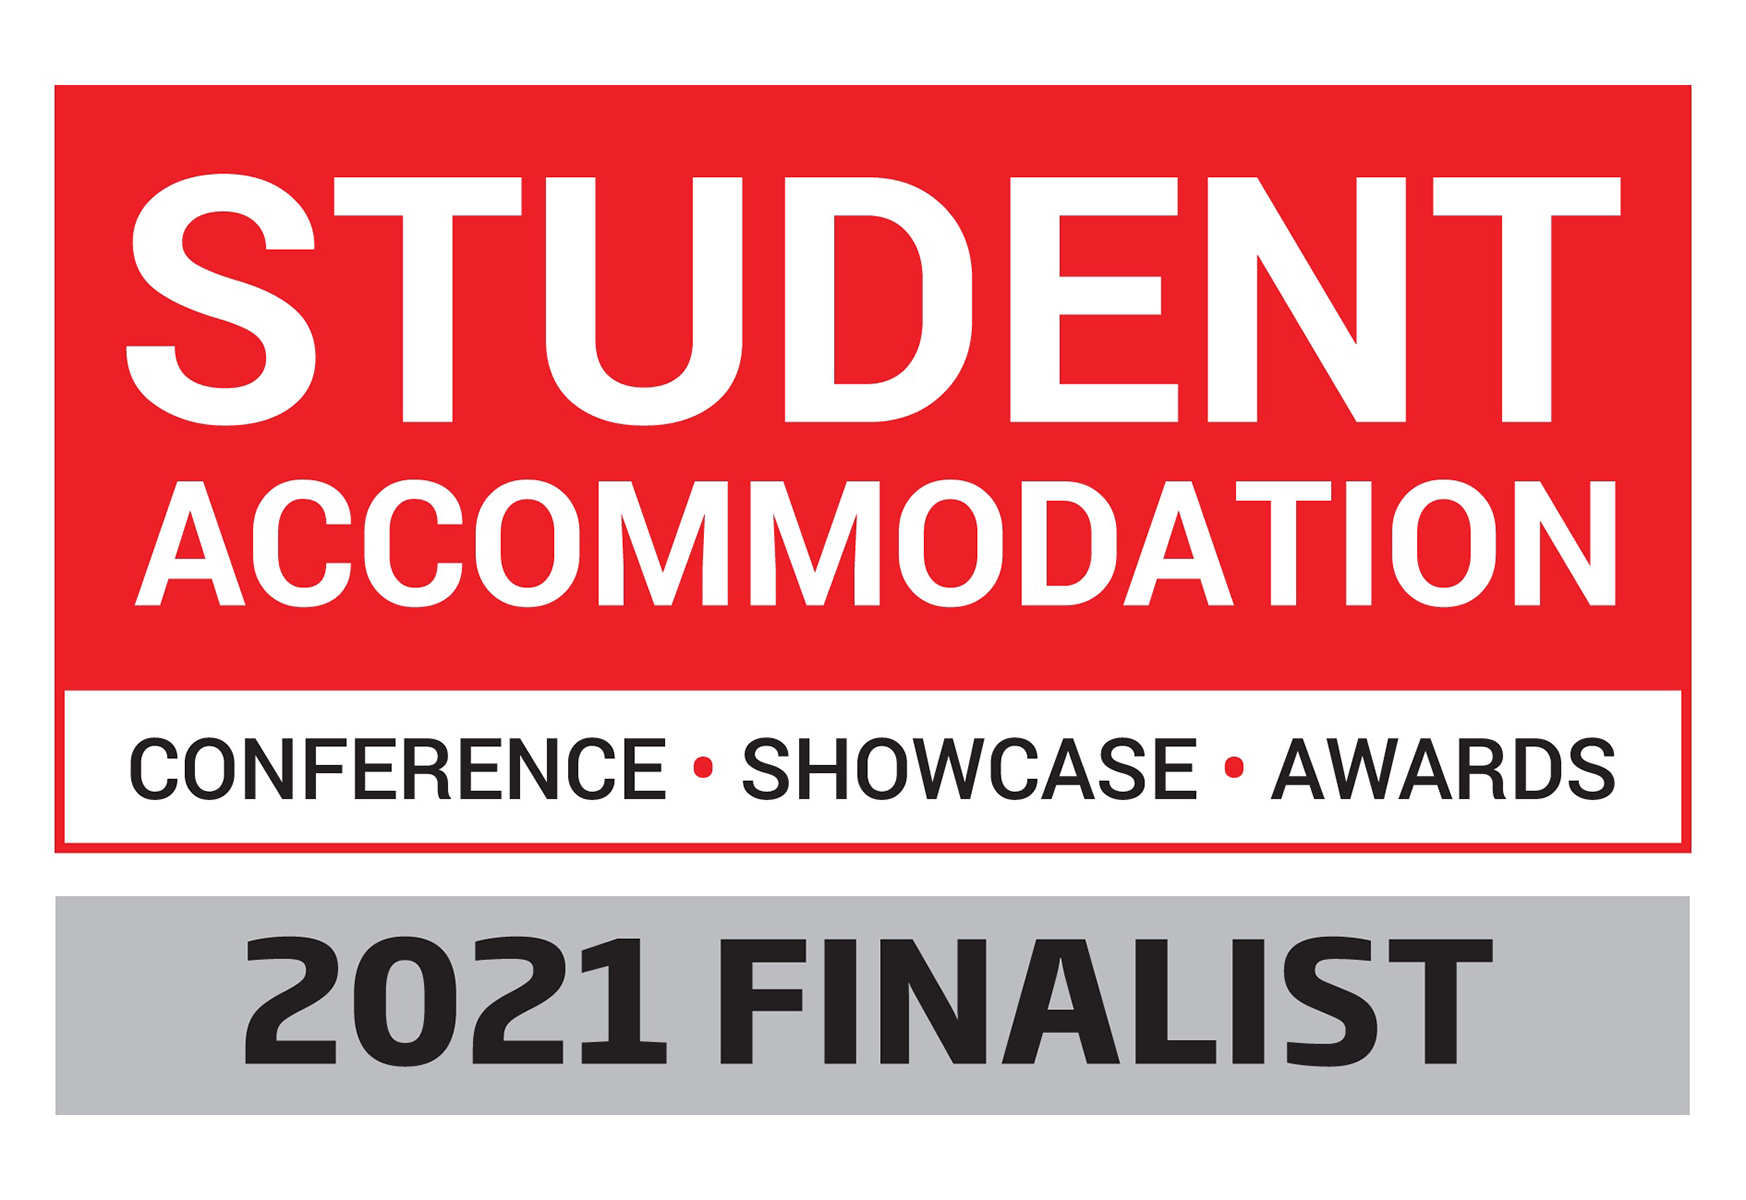 student accommodation finalist 2021 award badge